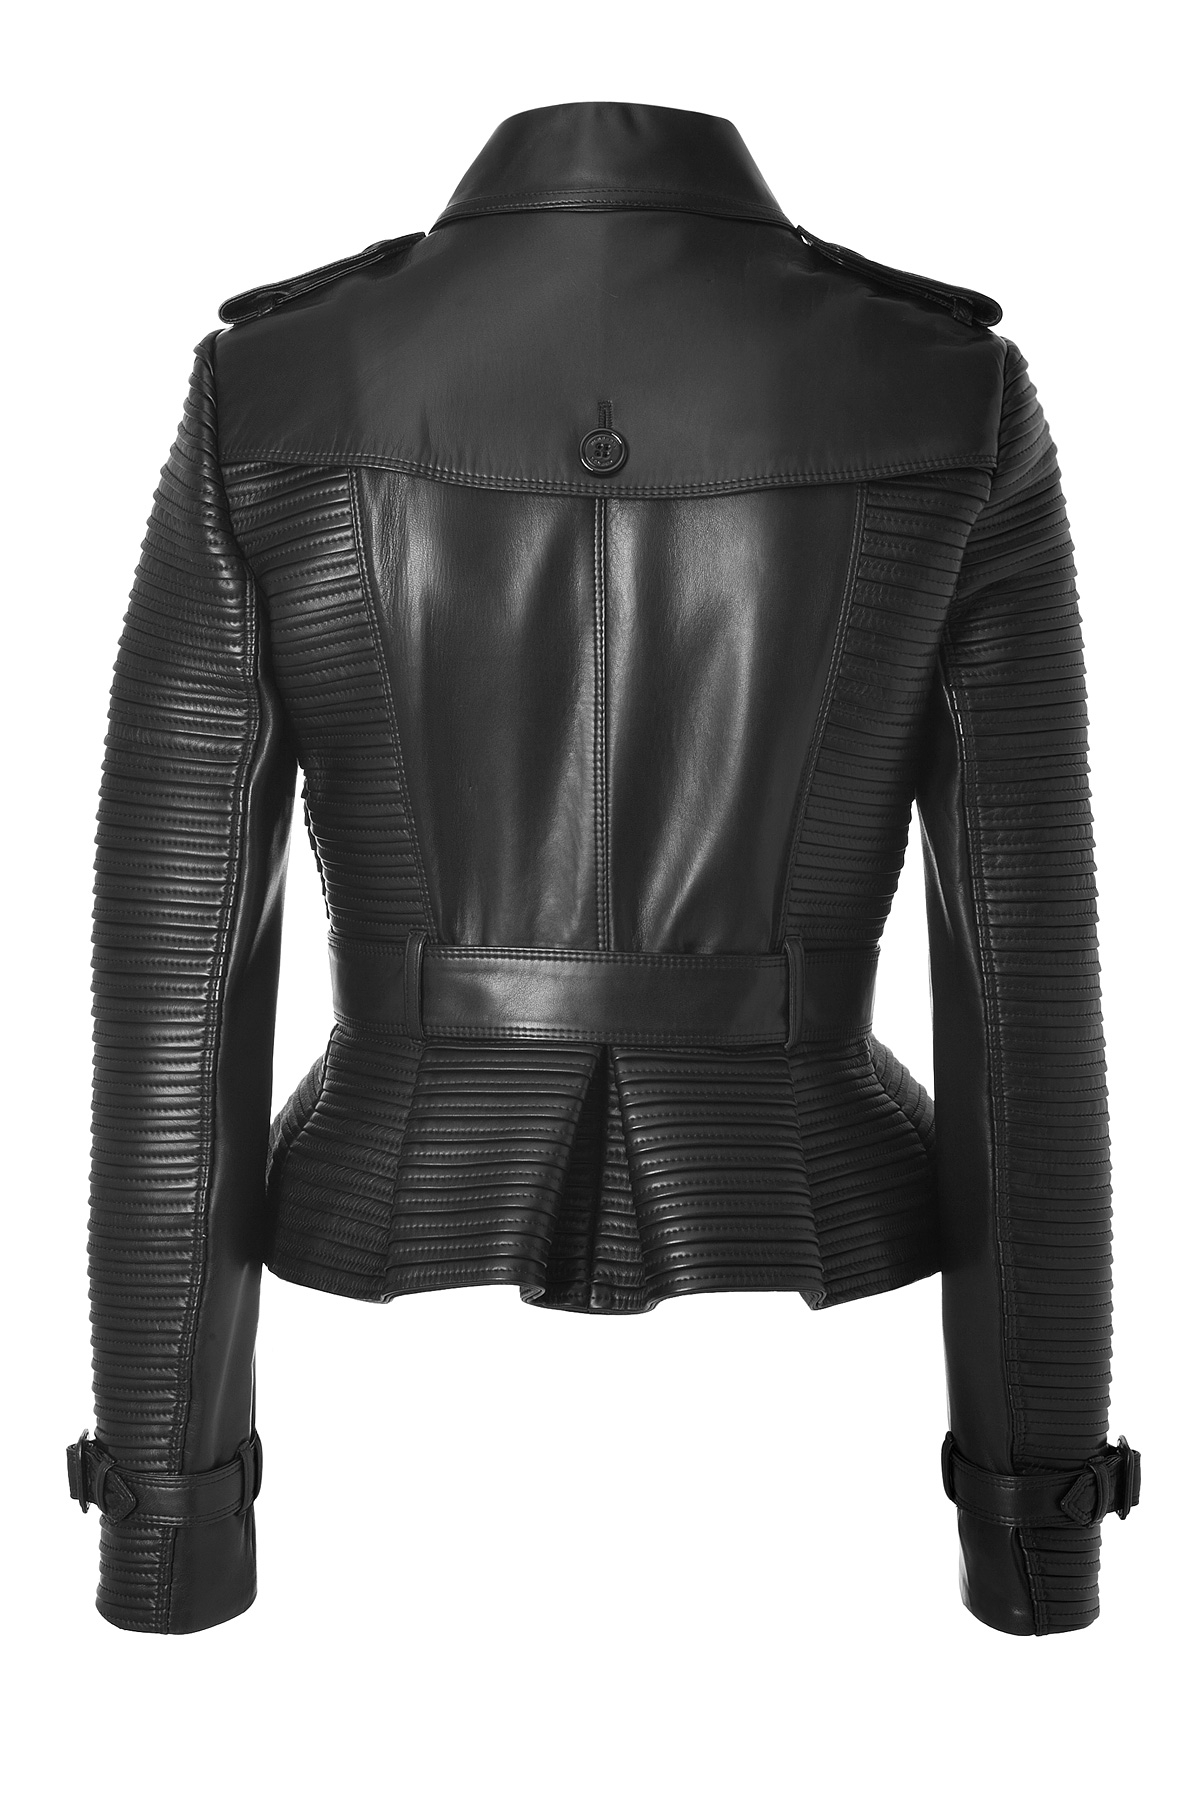 Lyst - Burberry Leather Headington Jacket in Black in Black